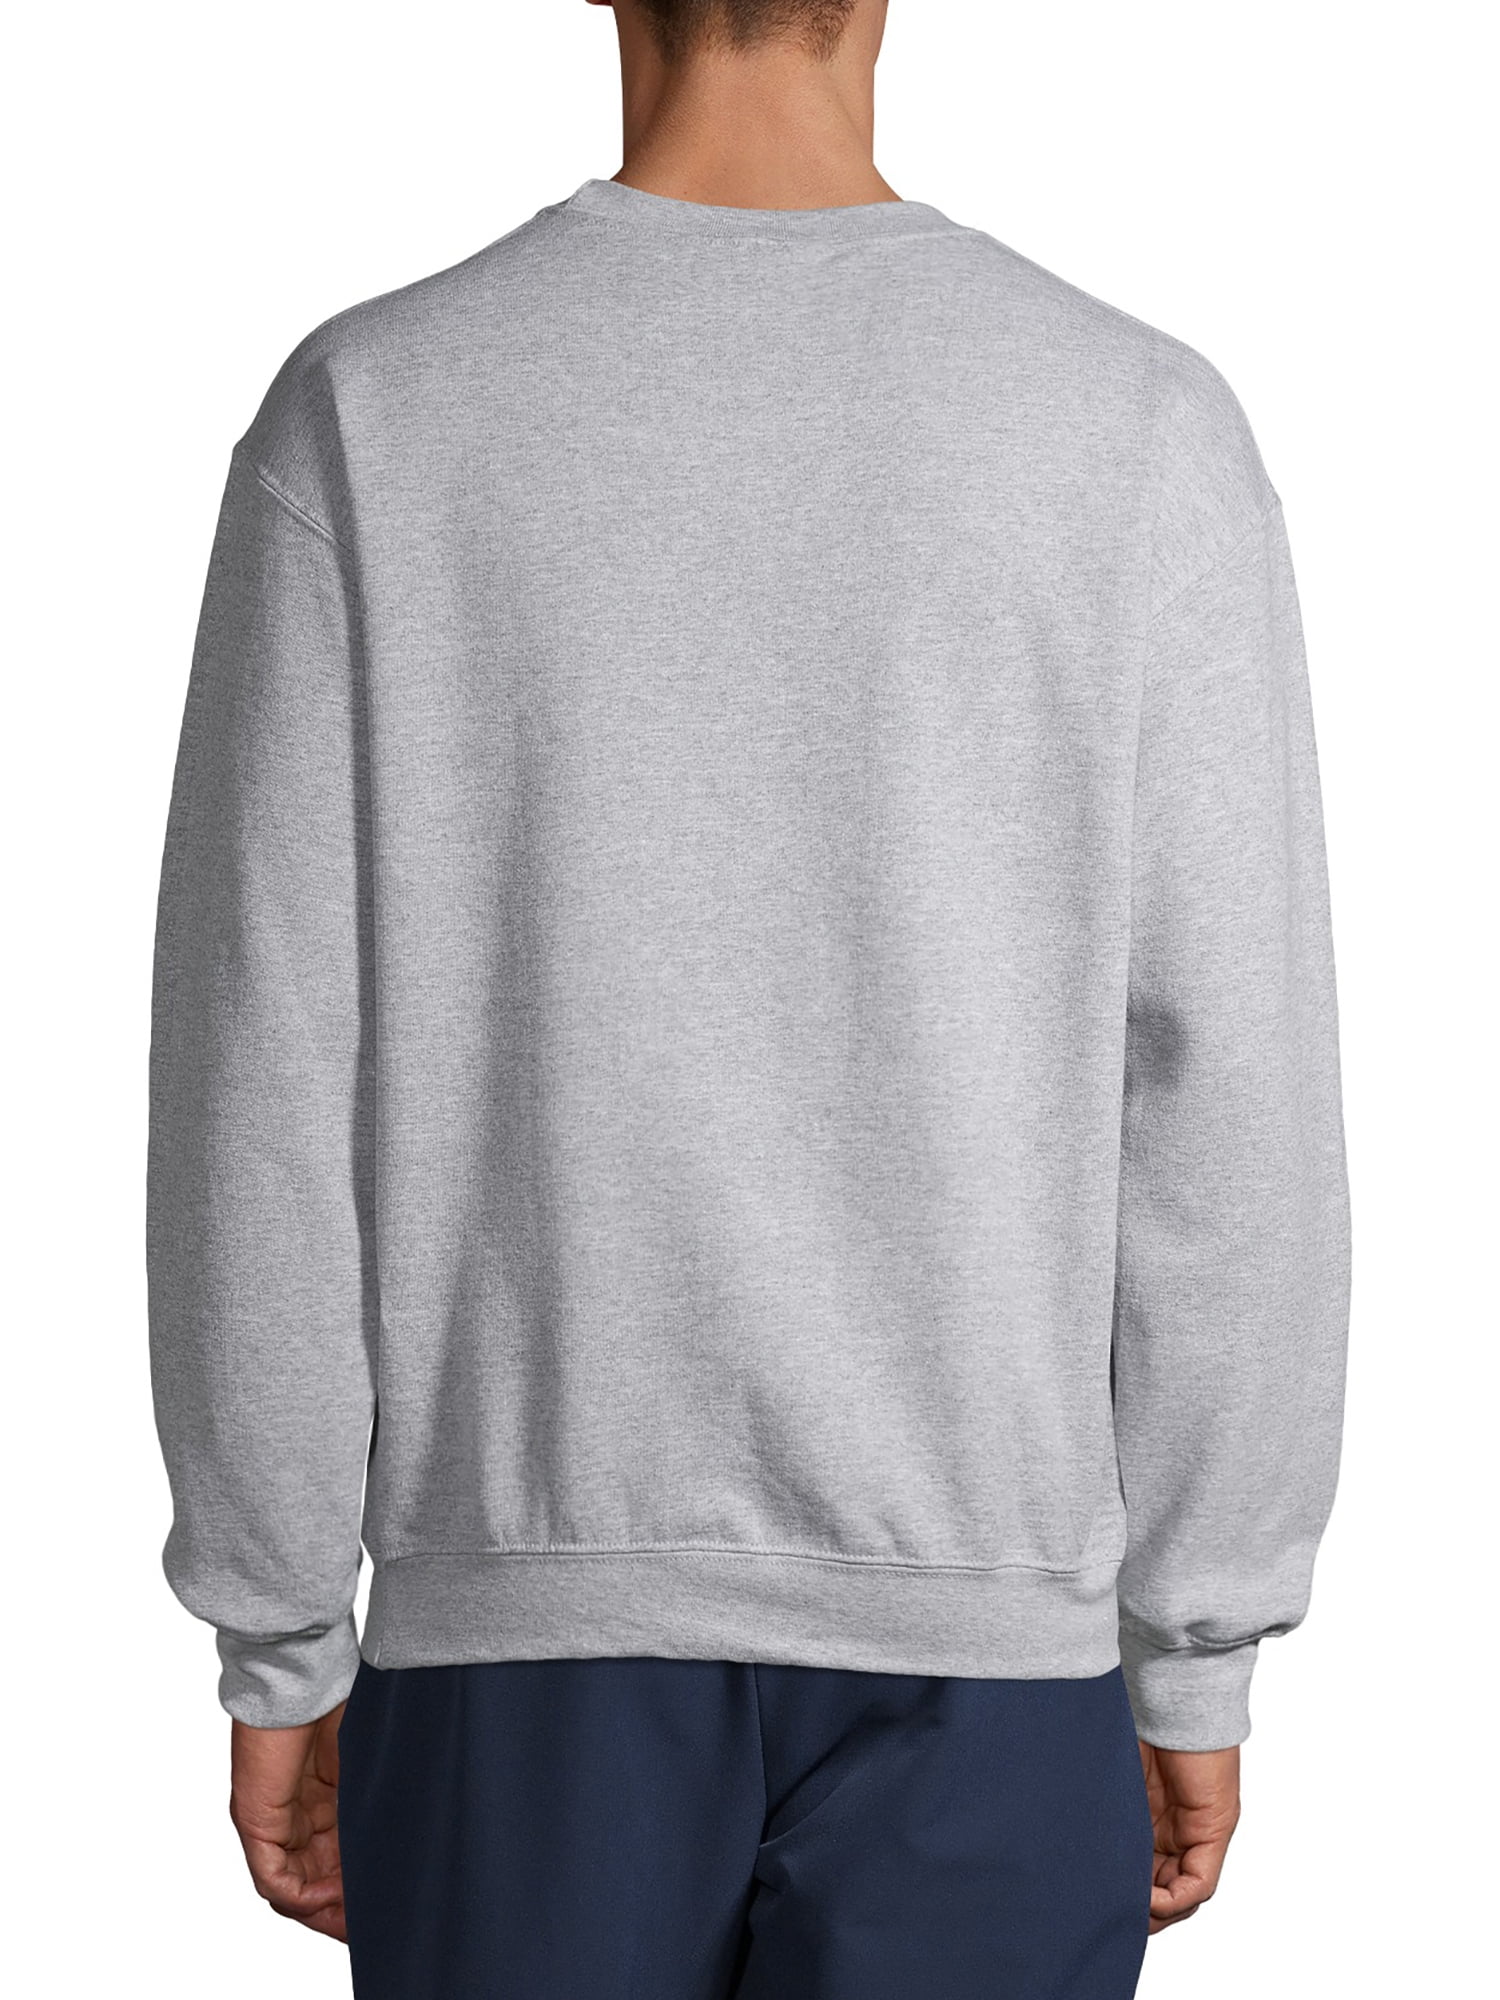 KIDS FASHION Jumpers & Sweatshirts Hoodless Levi's sweatshirt Navy Blue/Gray/Pink discount 90% 